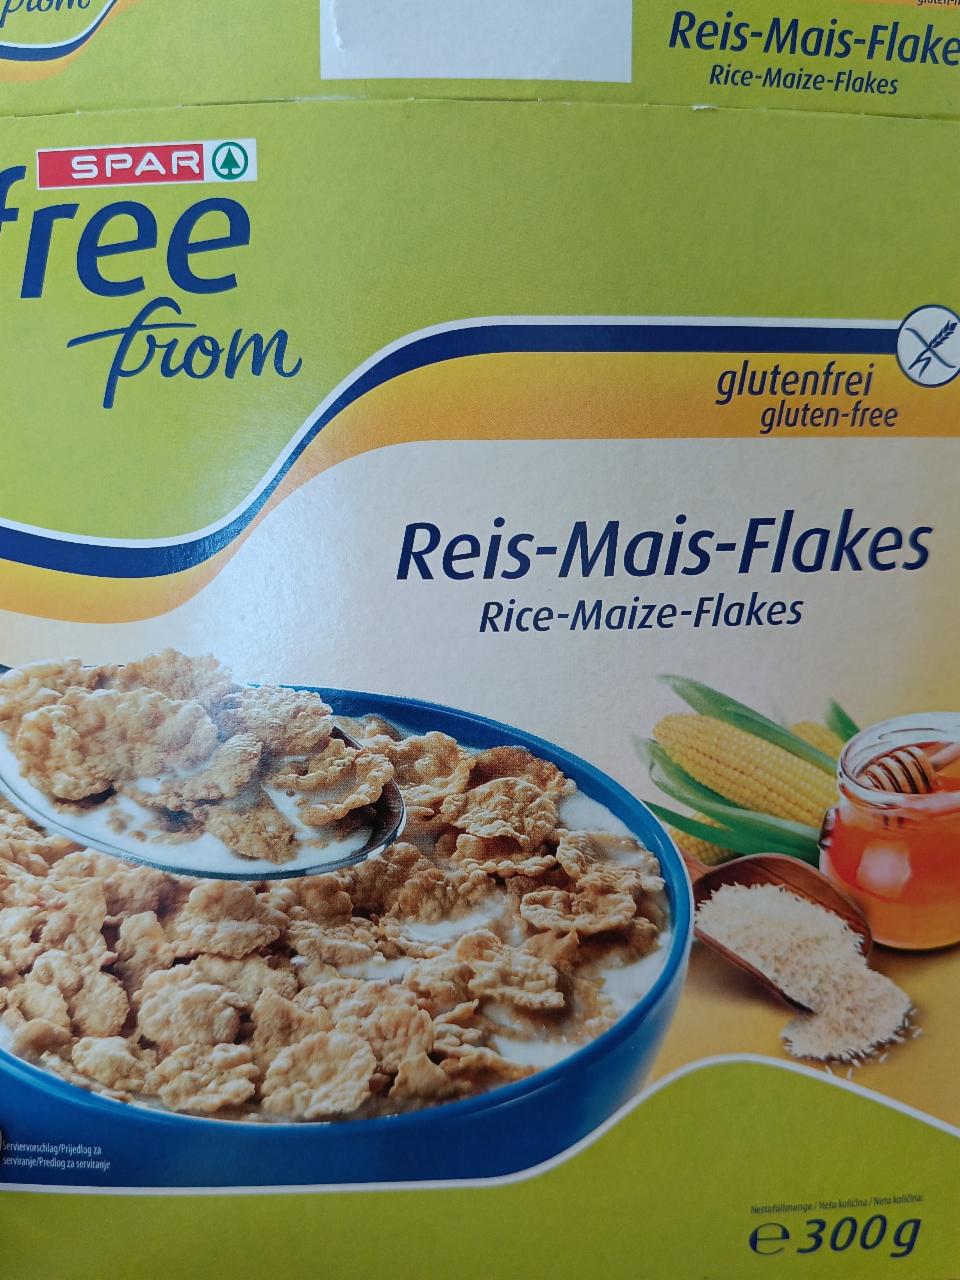 Fotografie - Reis-Mais-Flakes Spar free from